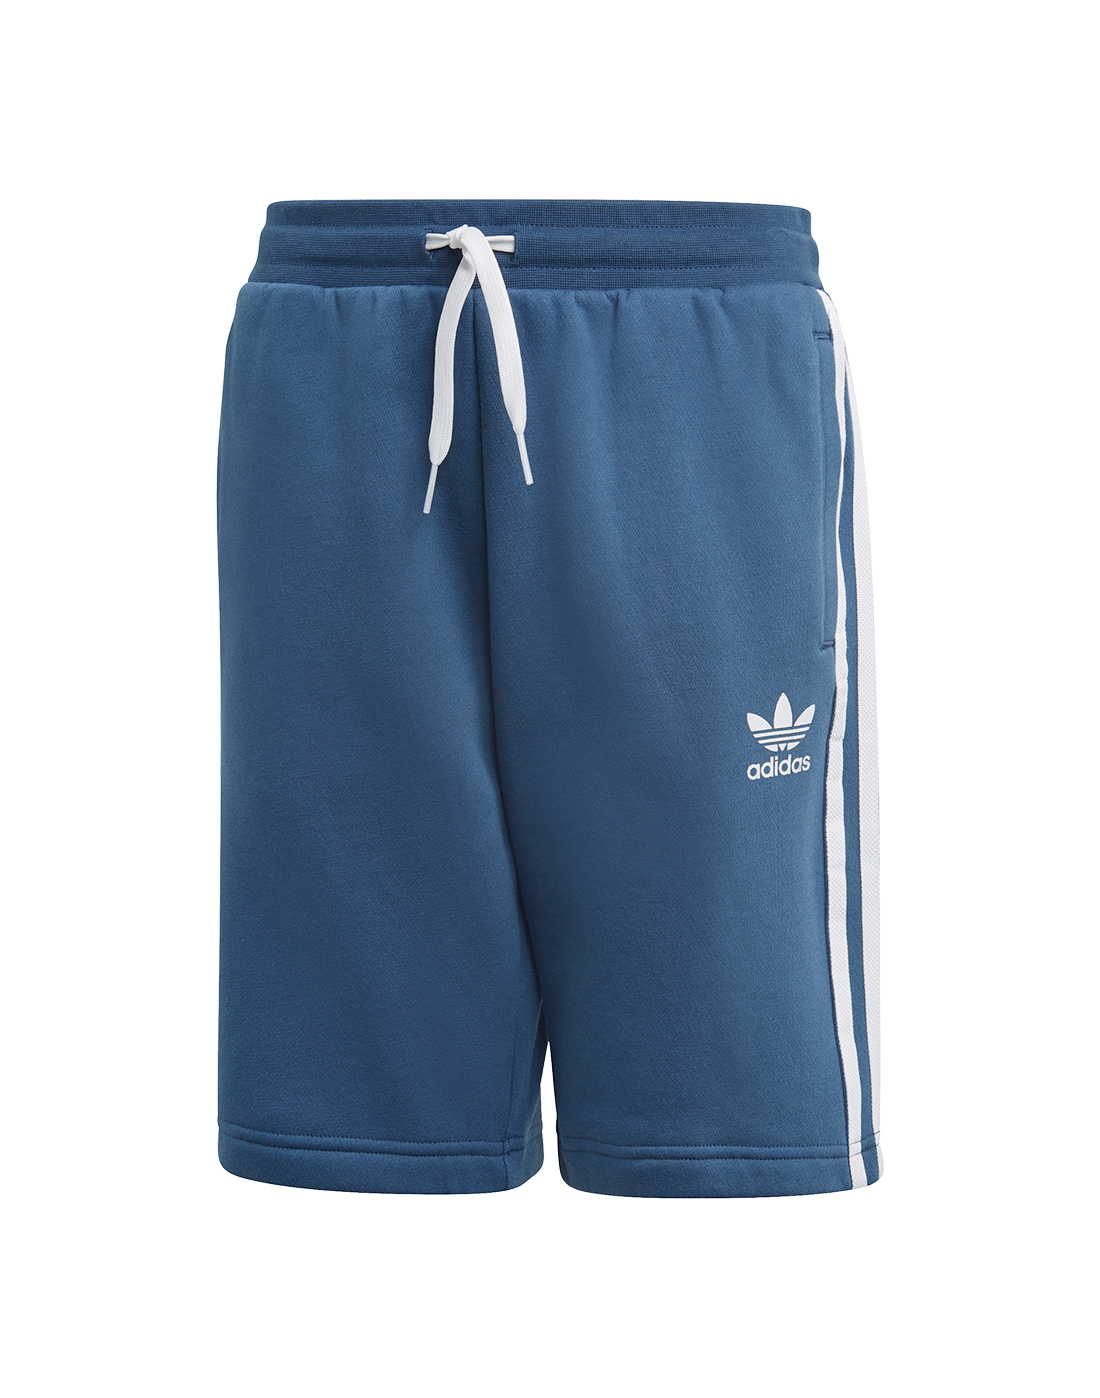 adidas Originals Older Boys Fleece Shorts - Navy | Life Style Sports IE